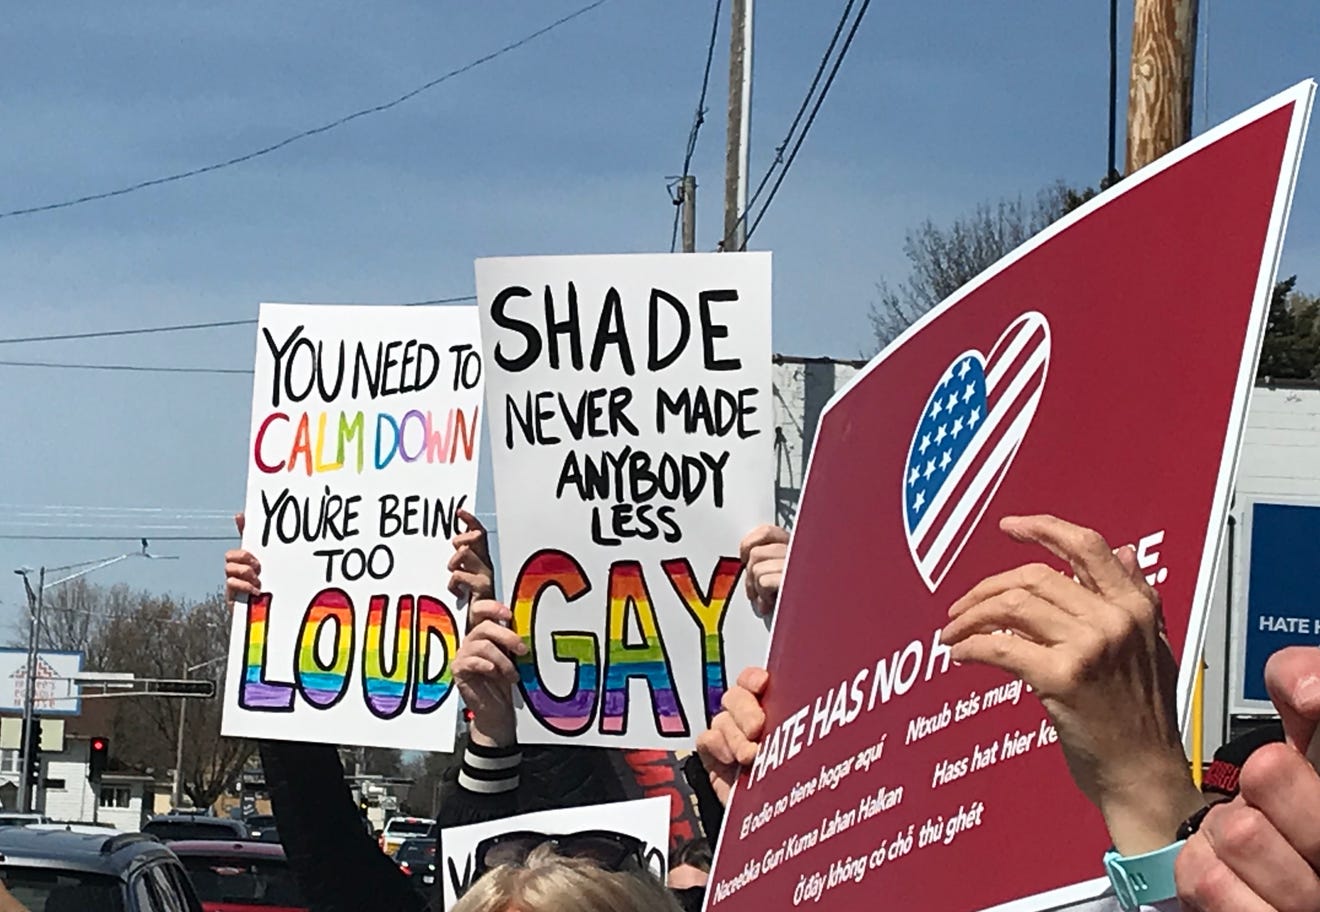 Appleton LGBTQ community, allies protest sign with homophobic slur